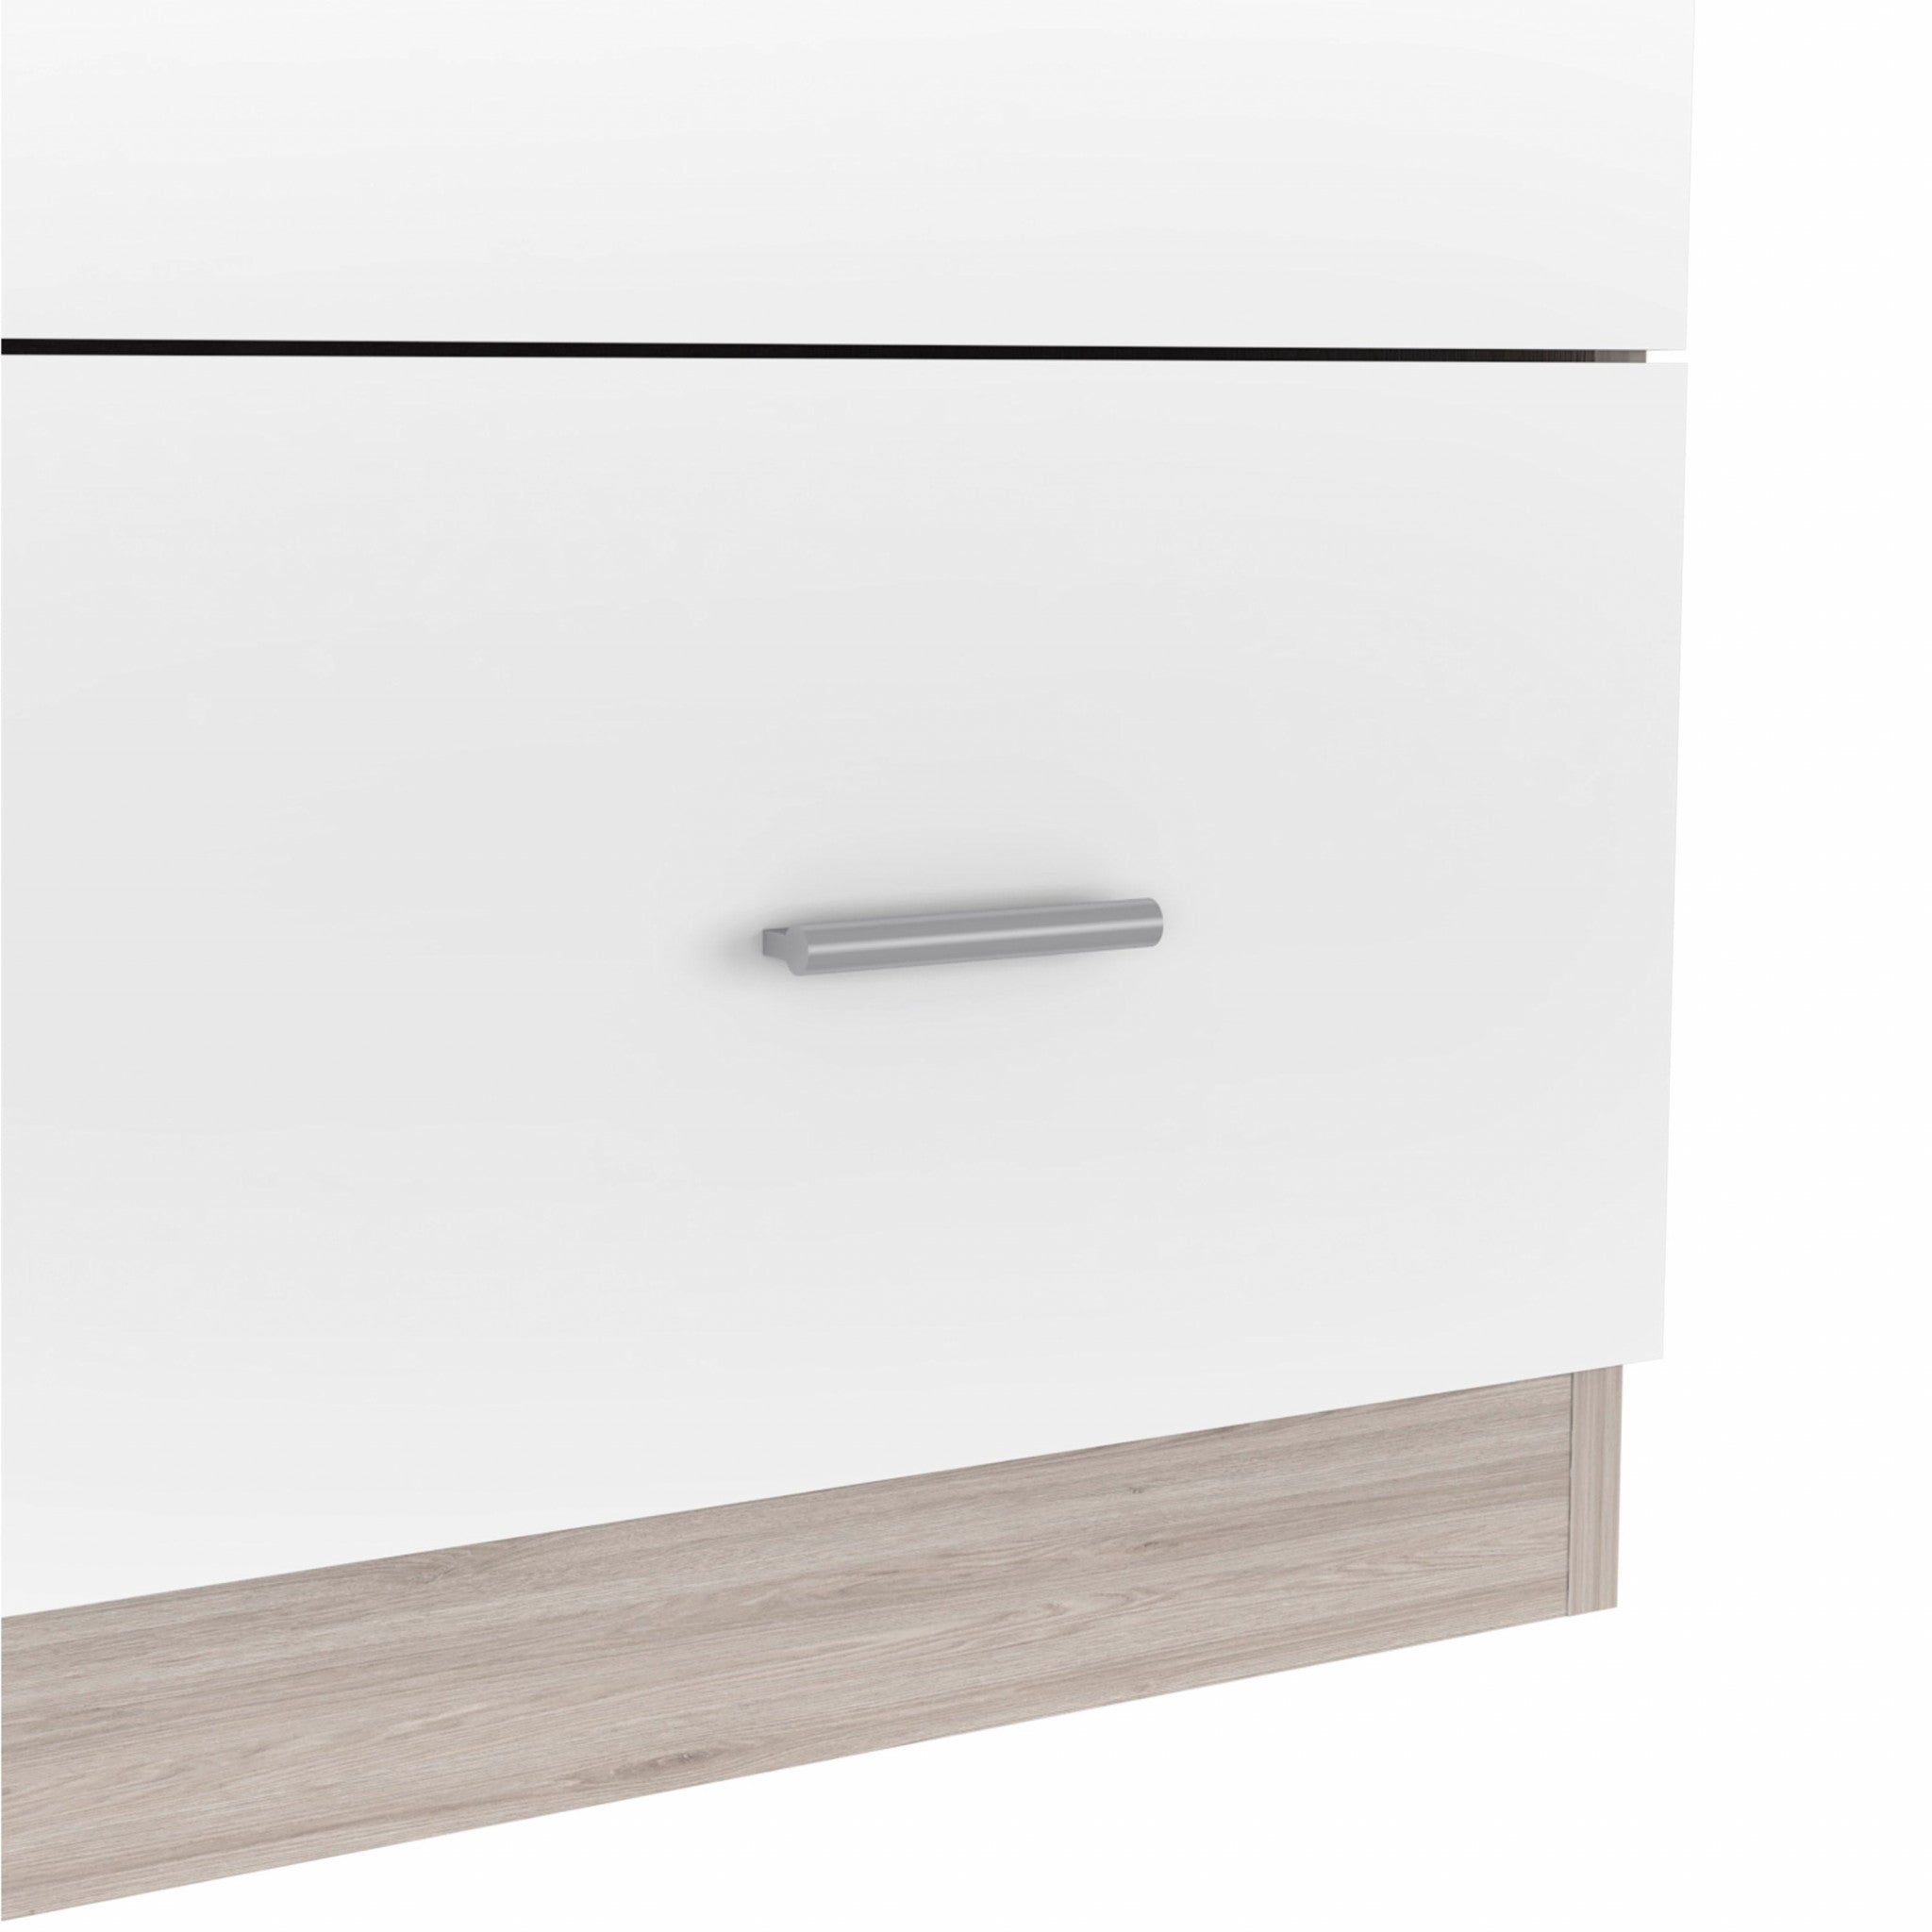 33" Light Gray and White Three Drawer Dresser Default Title